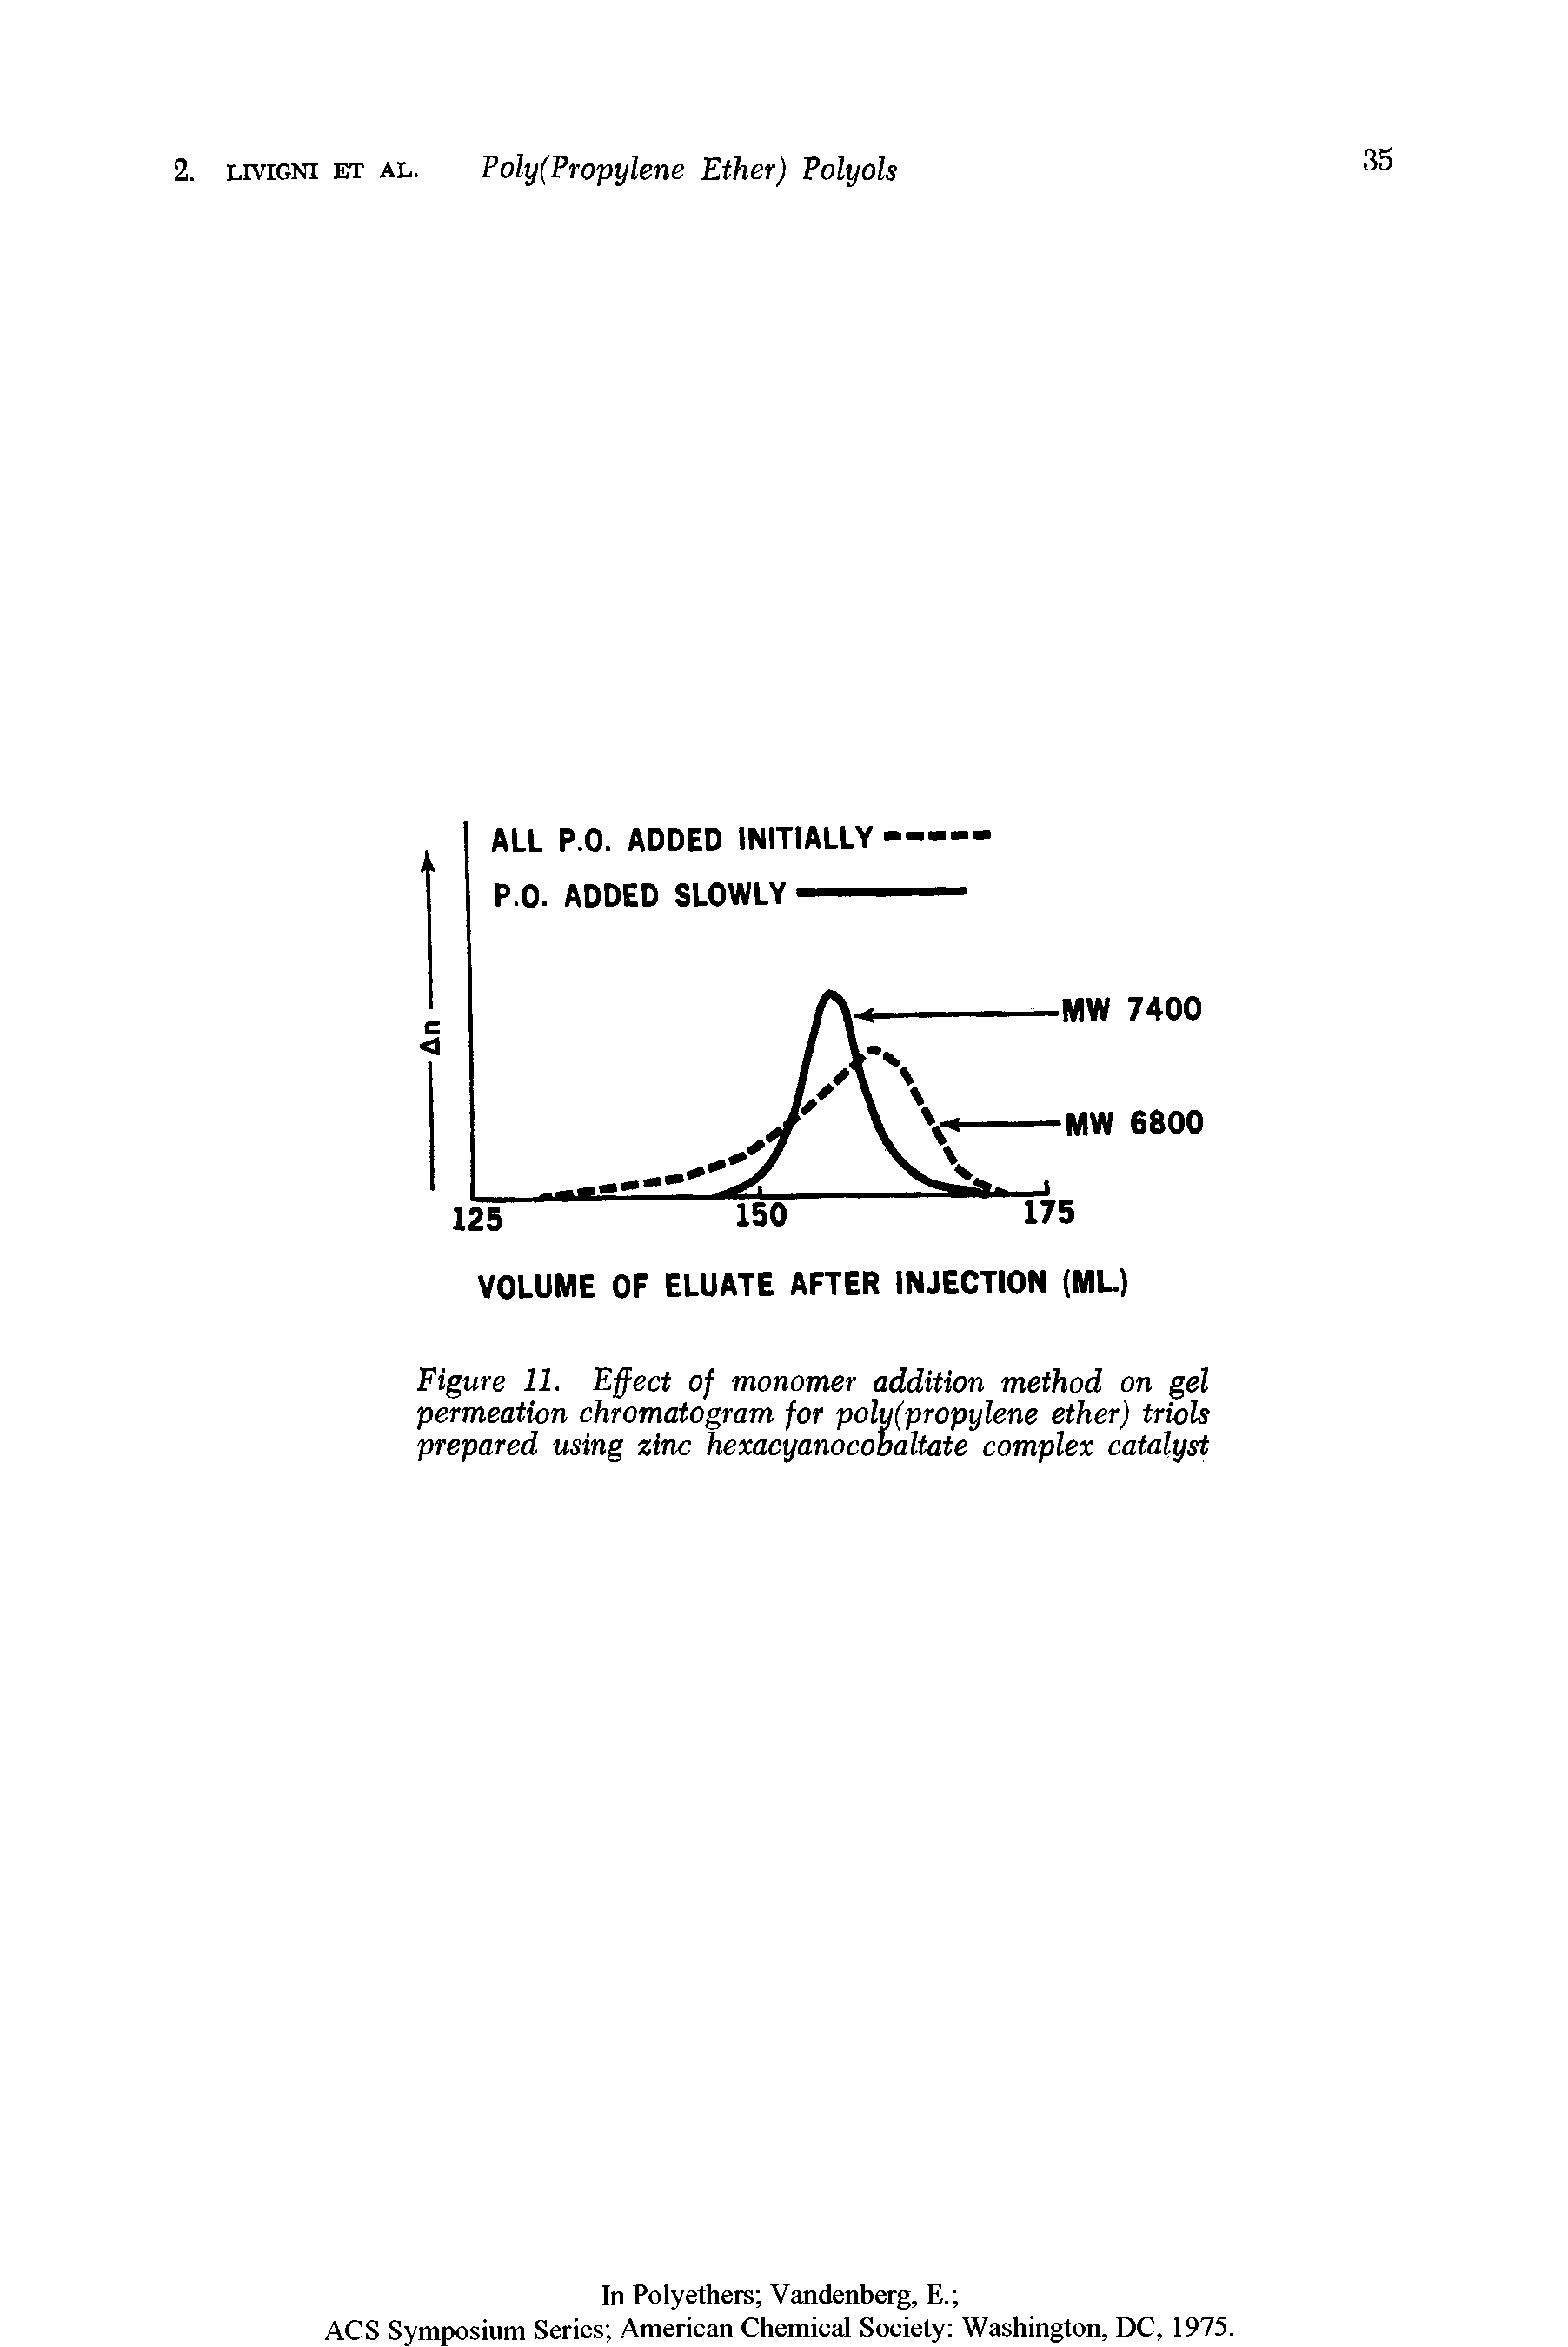 Figure 11. Effect of monomer addition method on gel permeation chromatogram for poly(propylene ether) trials prepared using zinc hexacyanocobaltate complex catalyst...